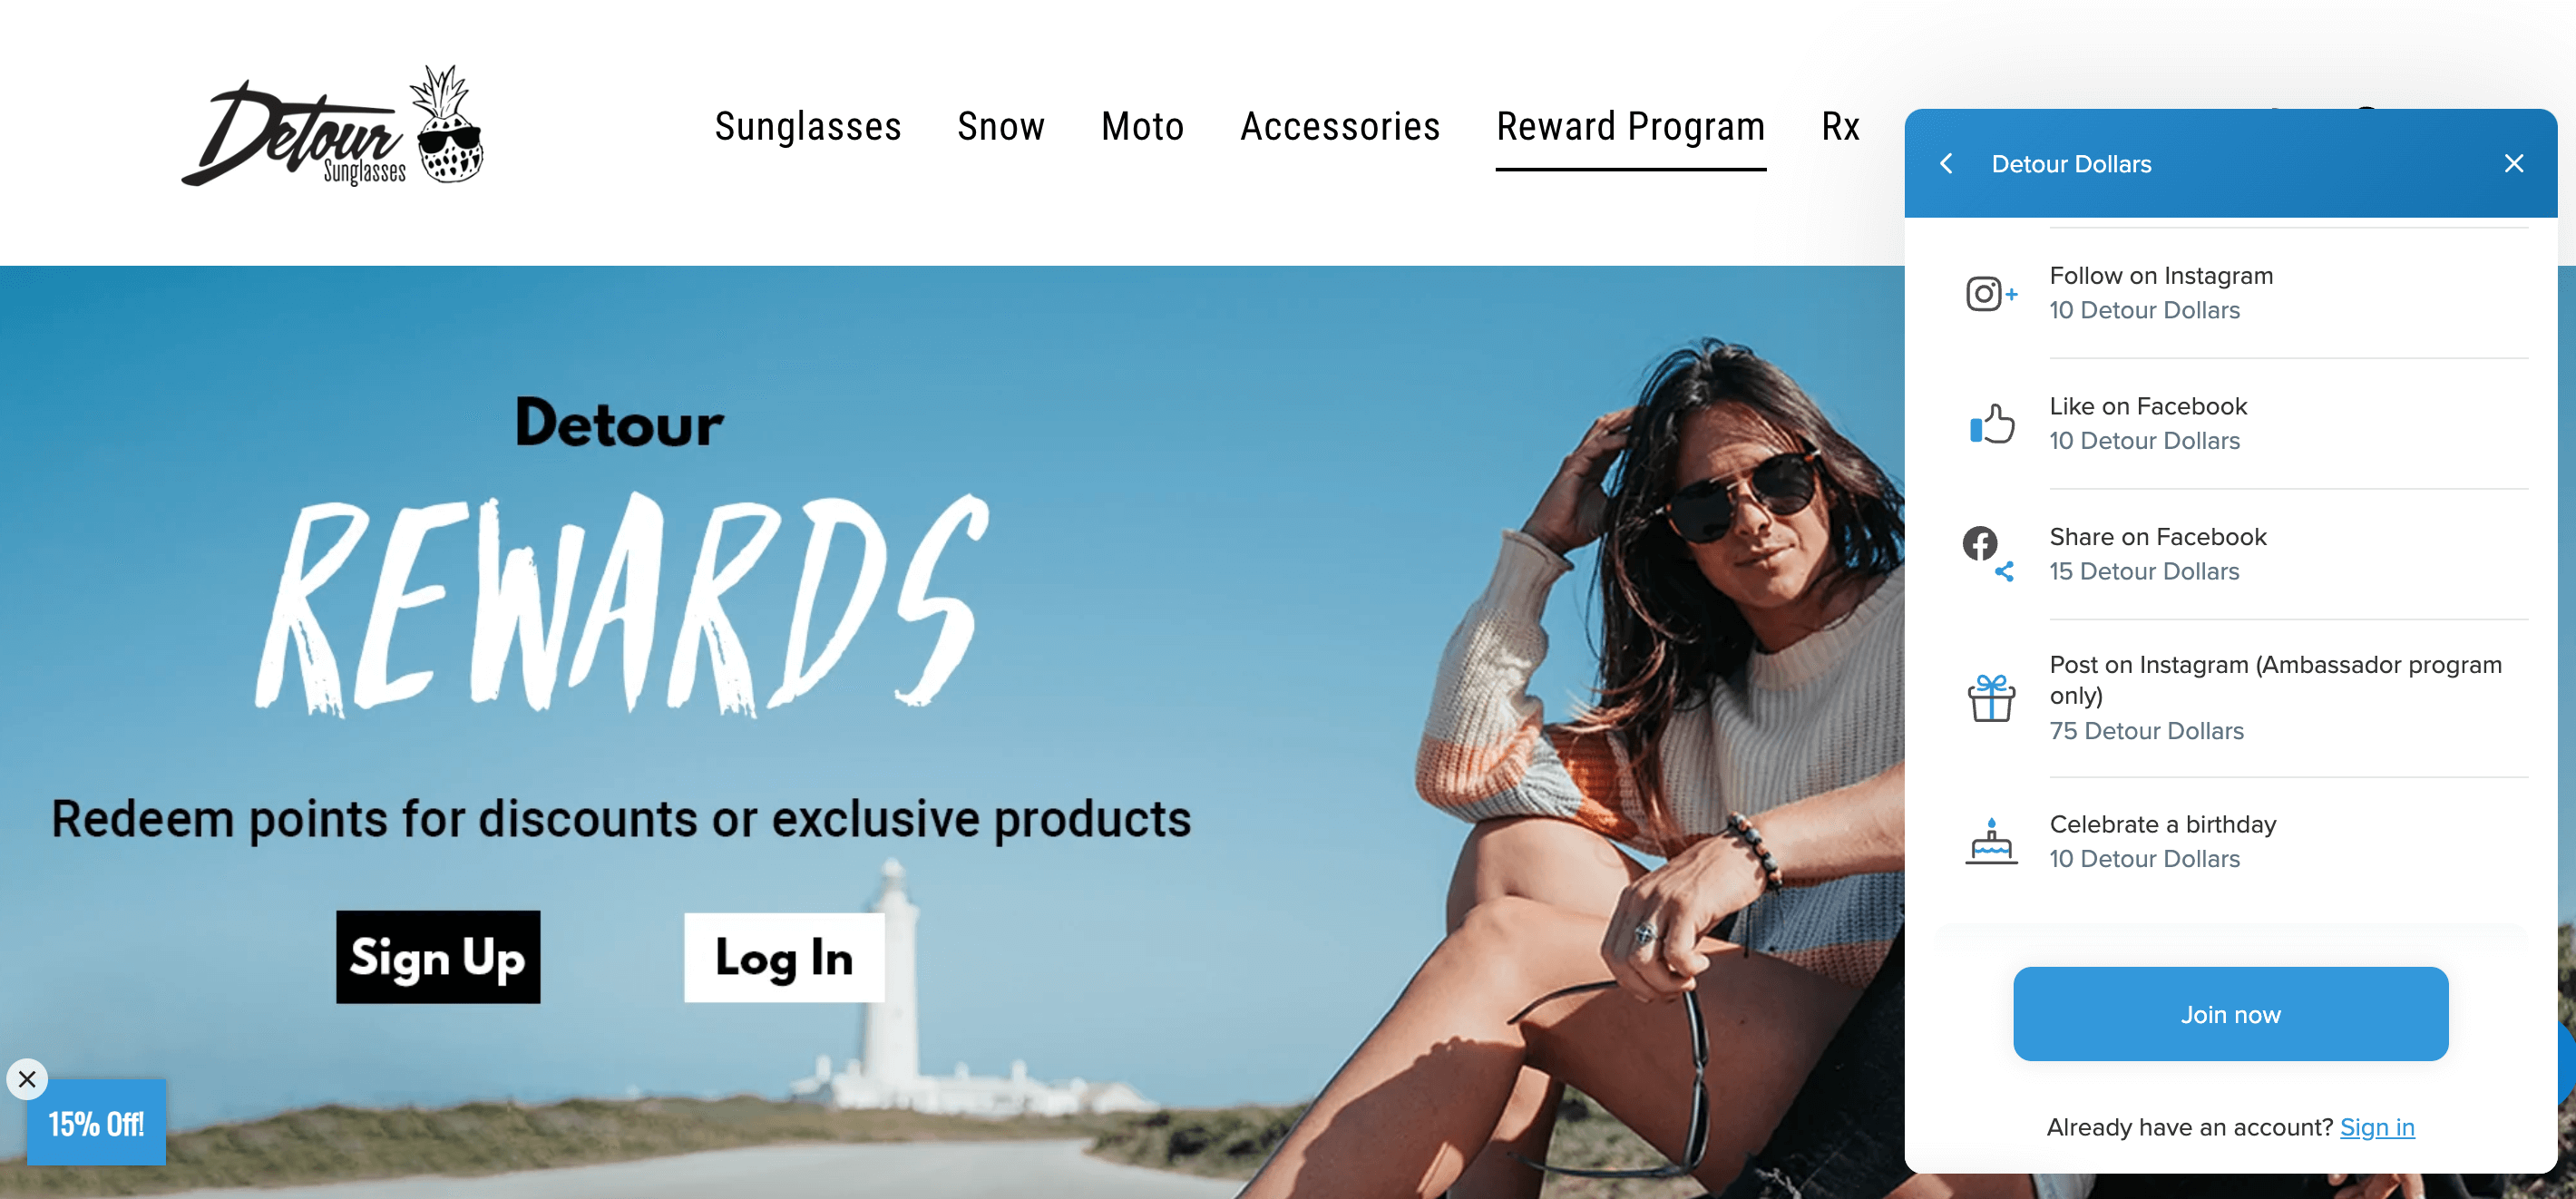 screenshot of Detour Sunglasses homepage with their rewards program panel